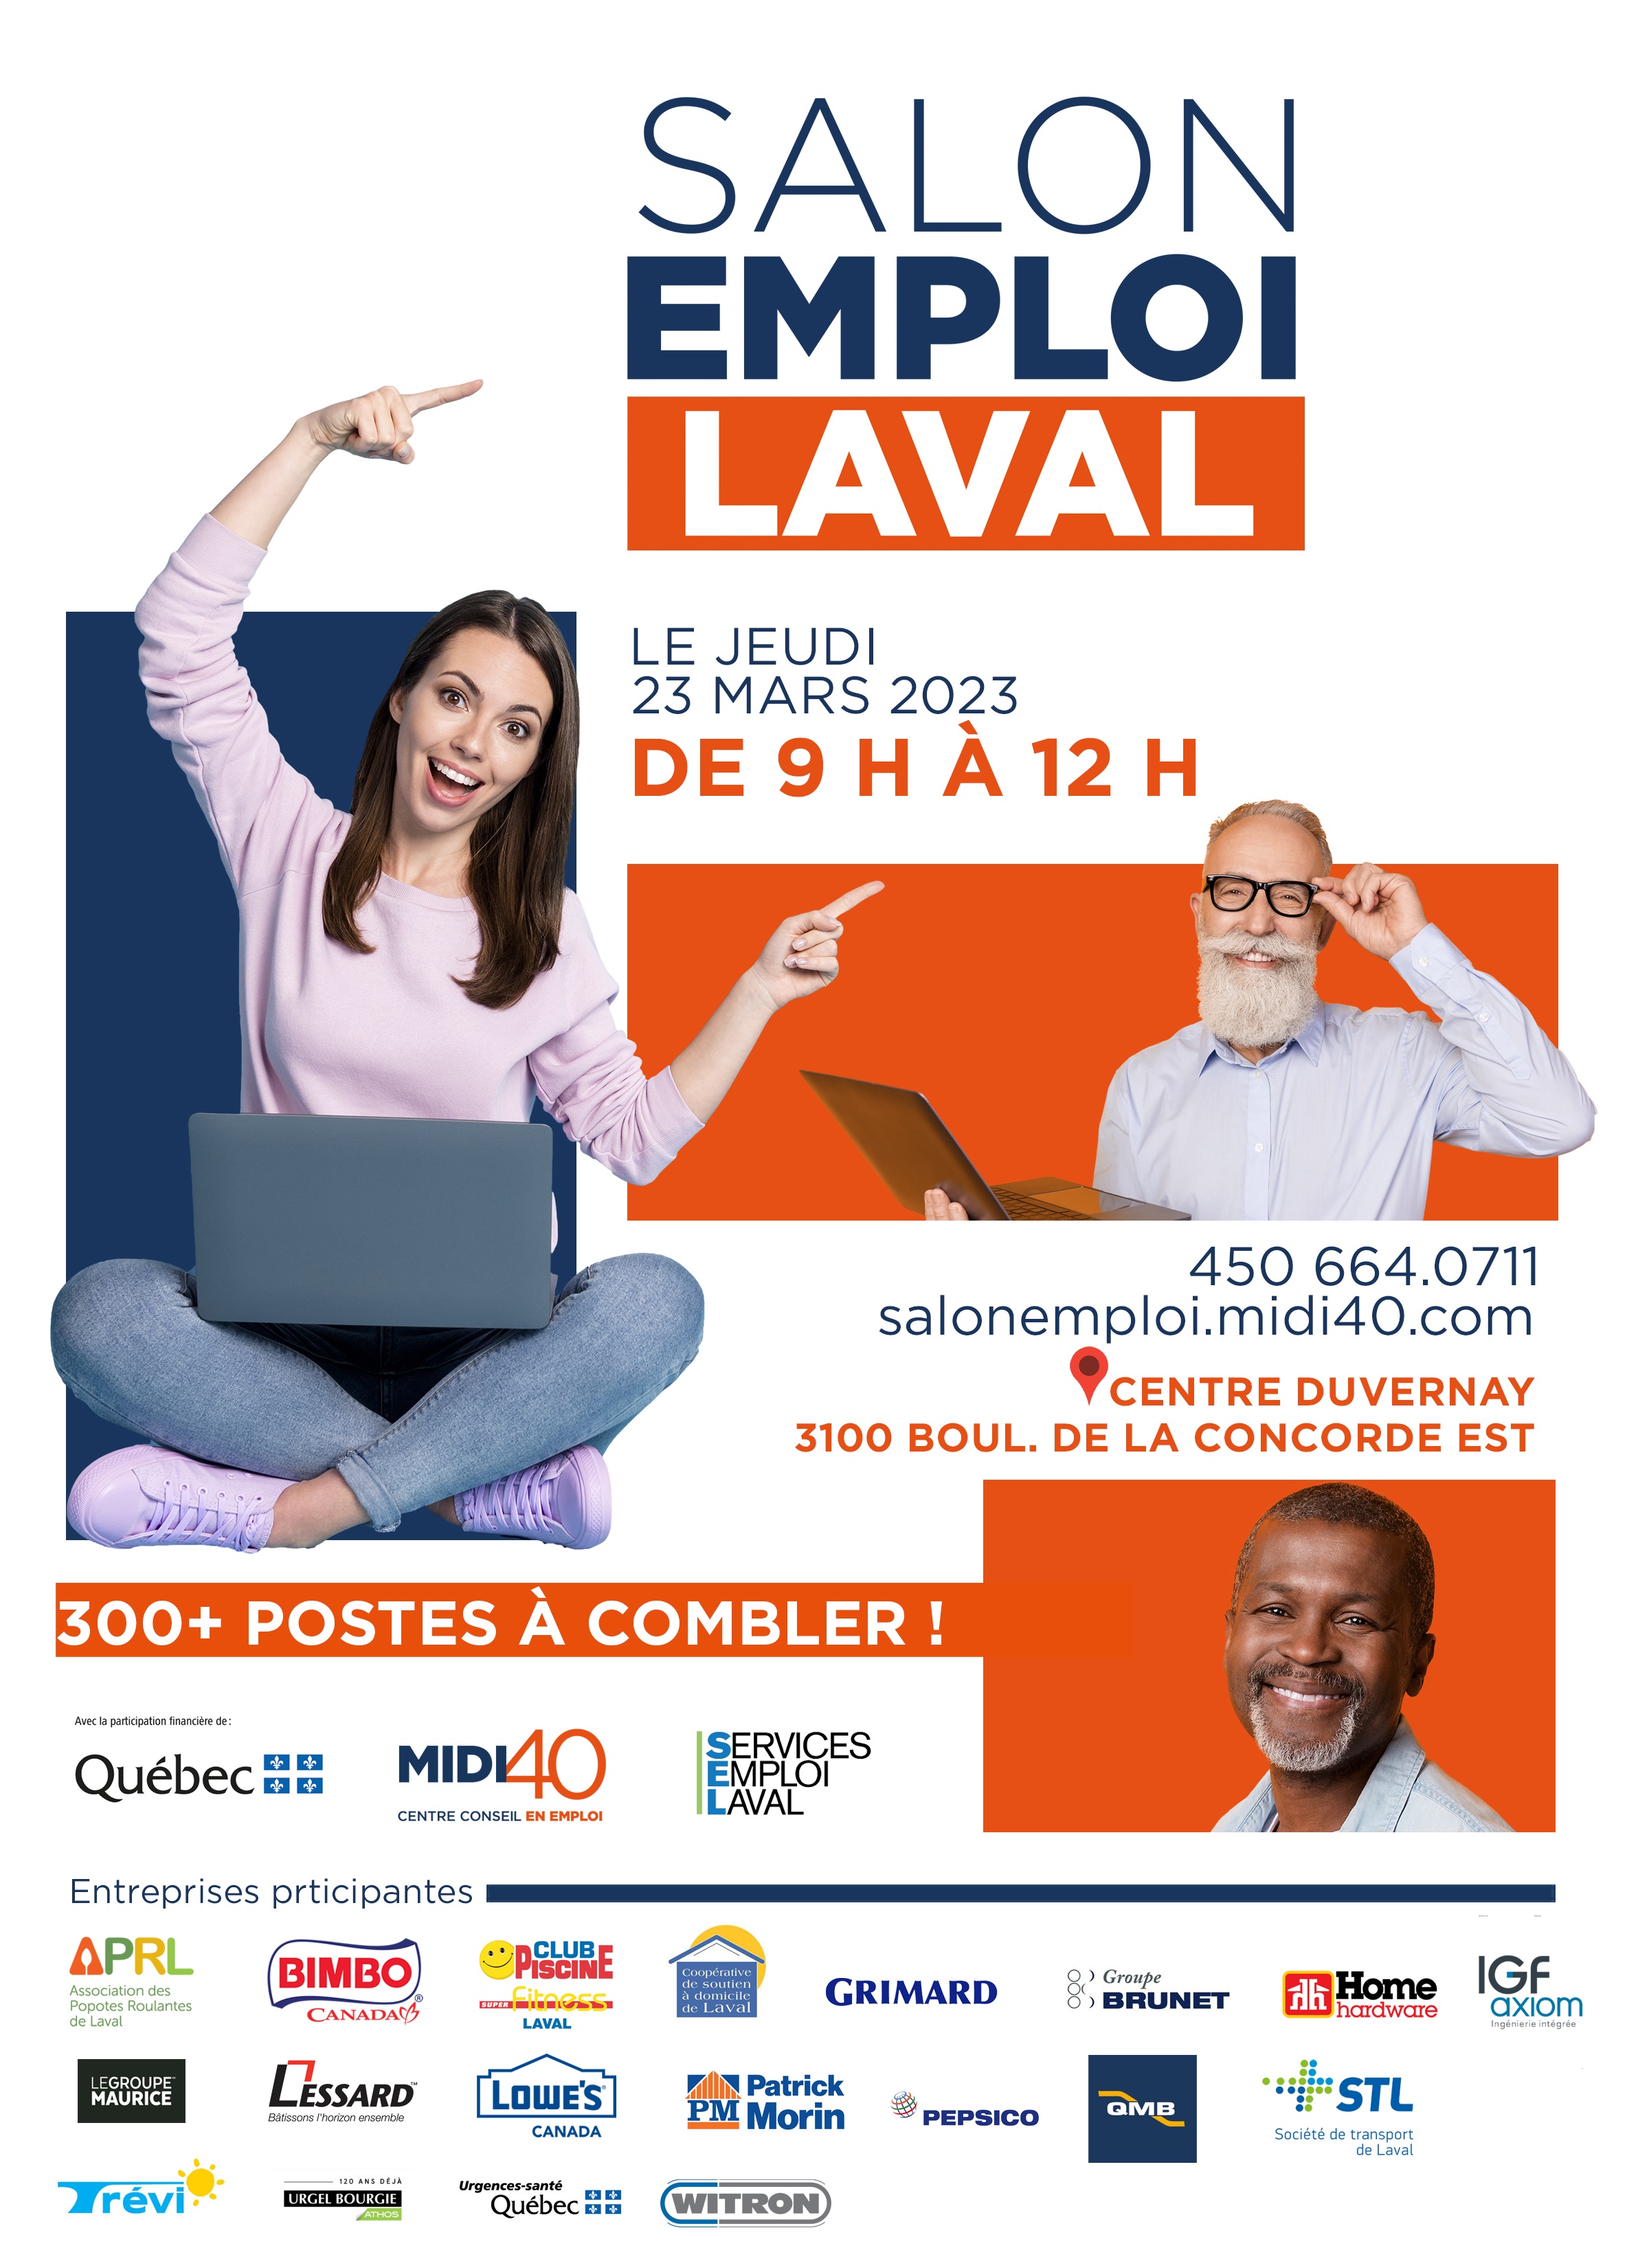 Salon Emploi Laval